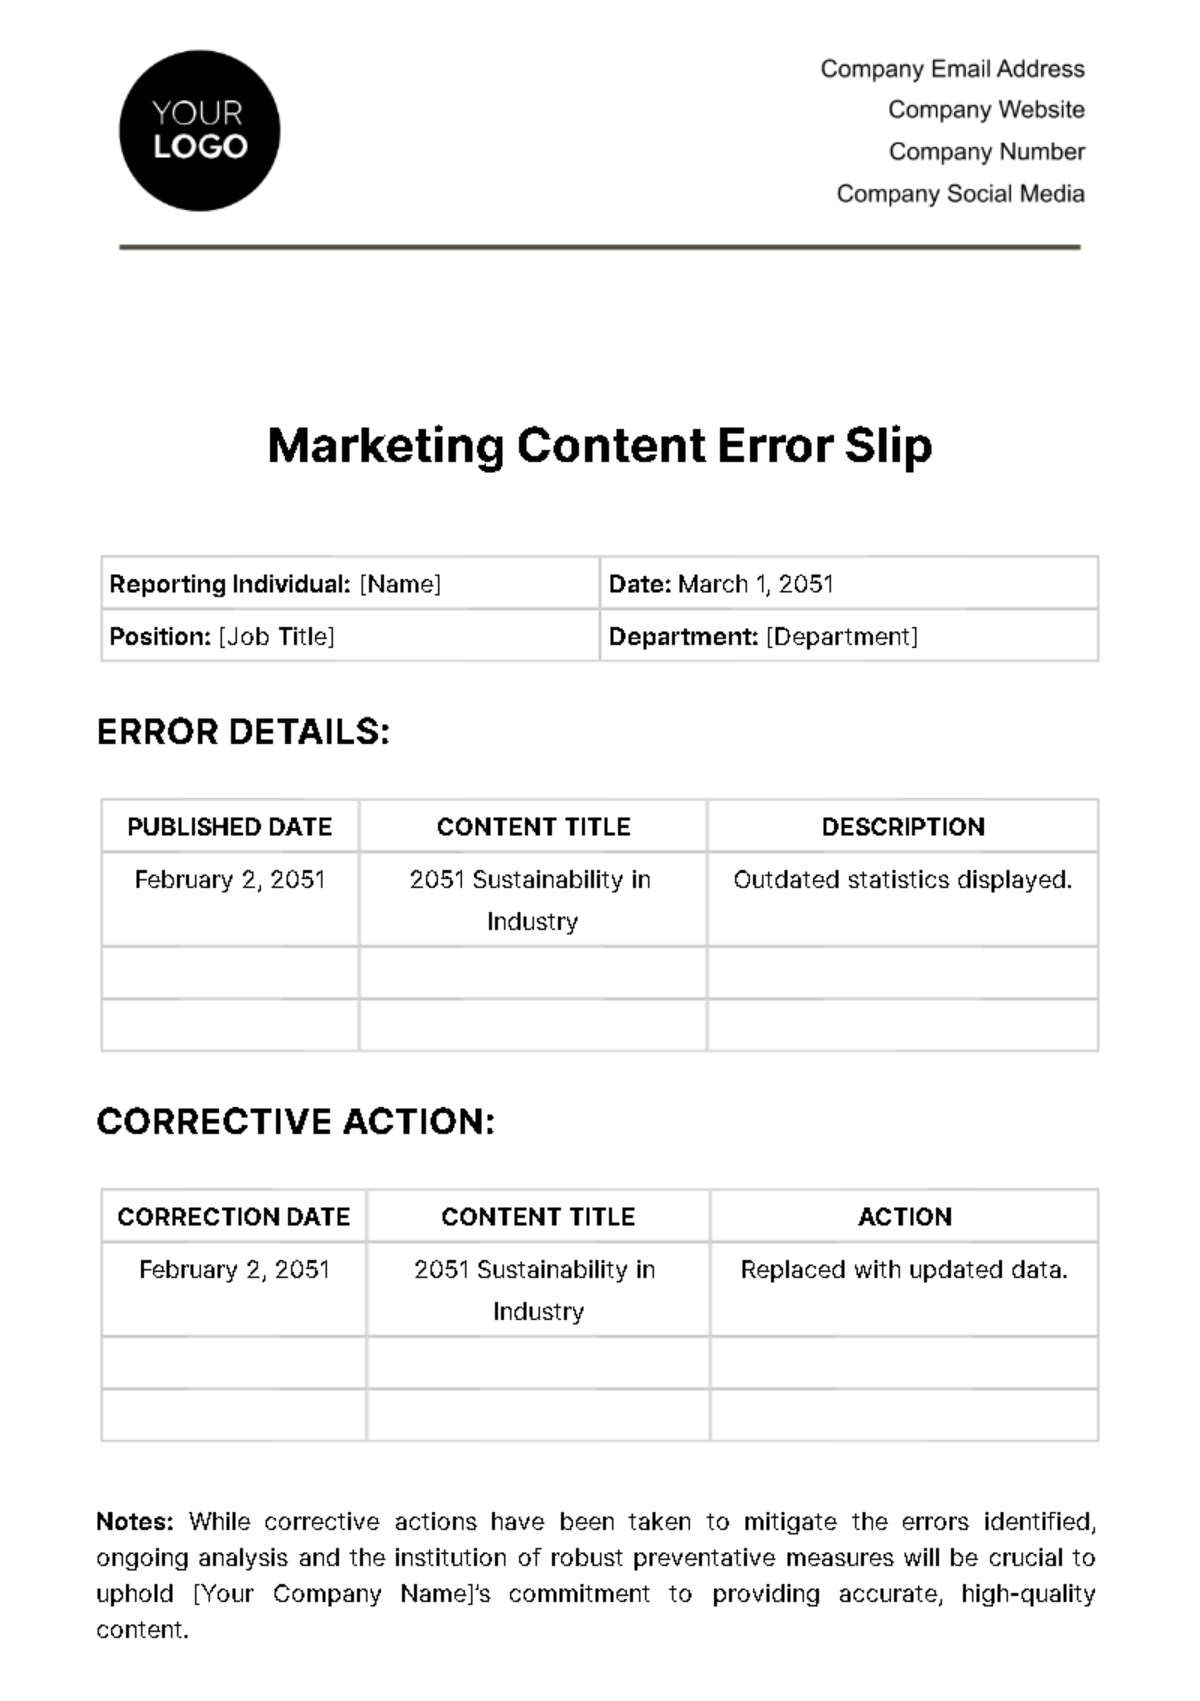 Marketing Content Error Slip Template